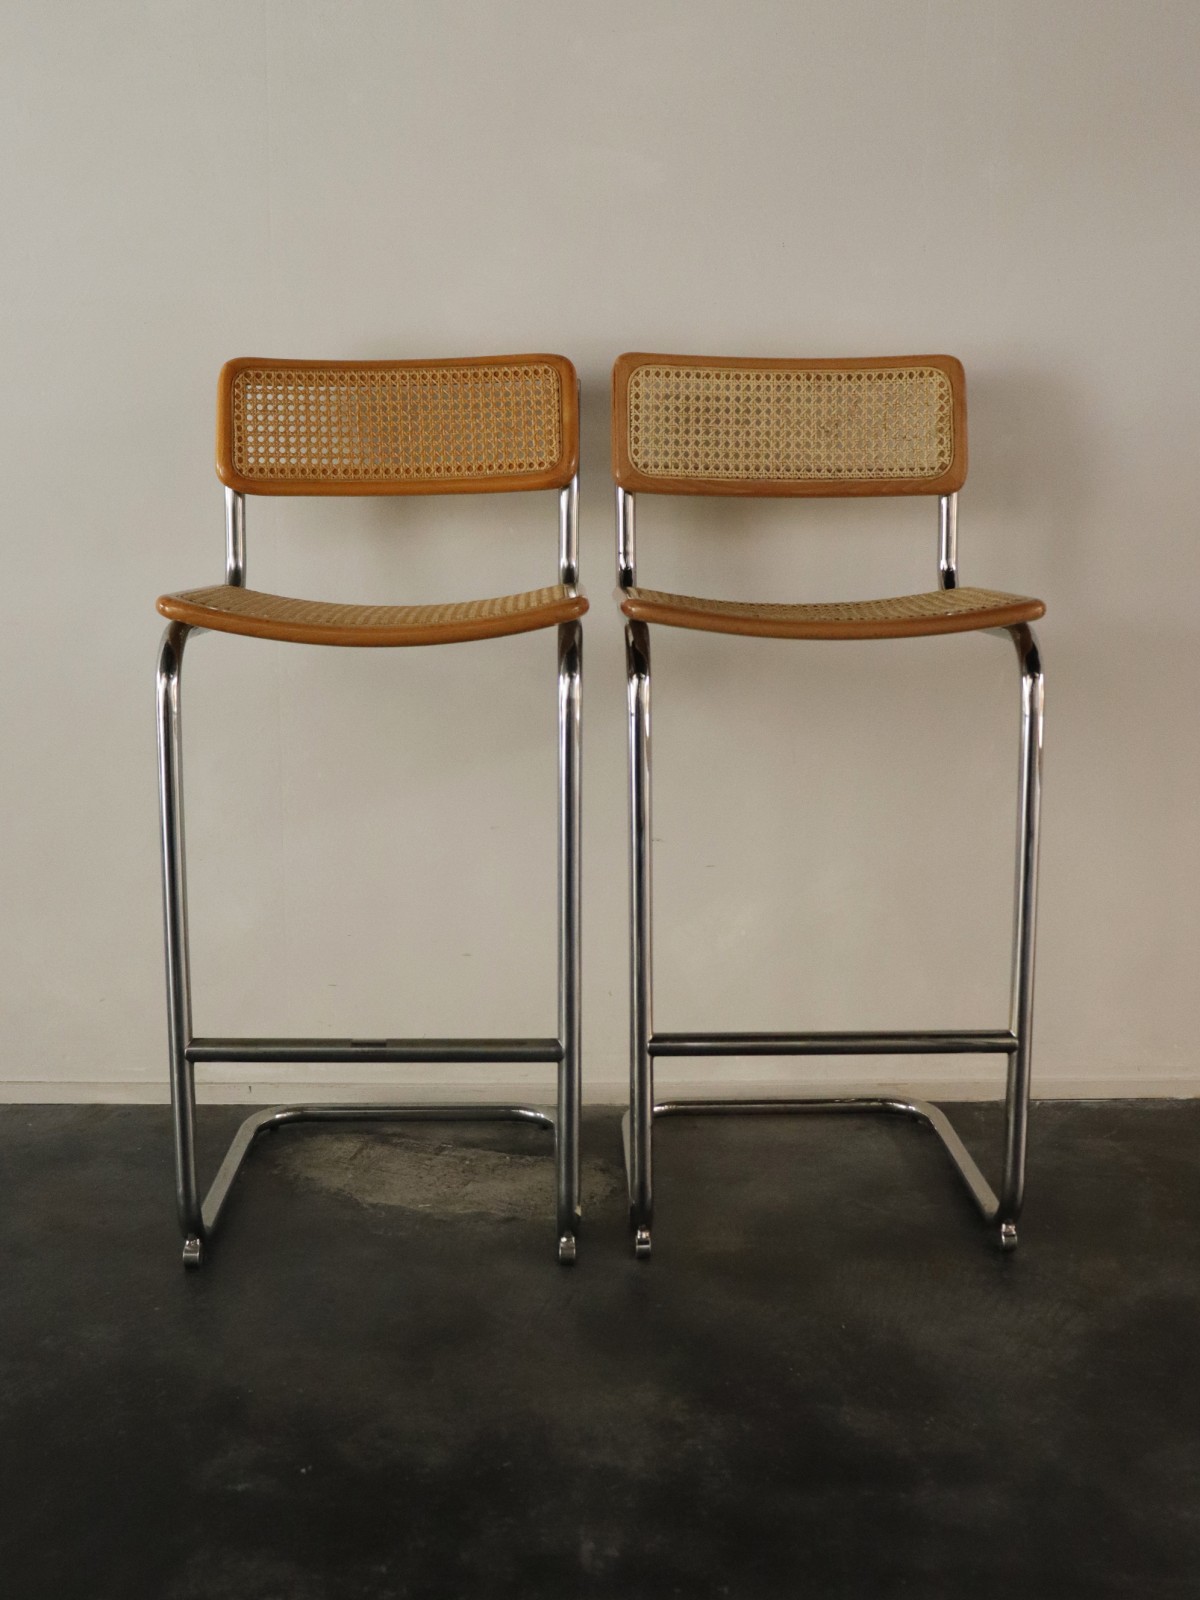 1970’s, Itarian chair, high stool